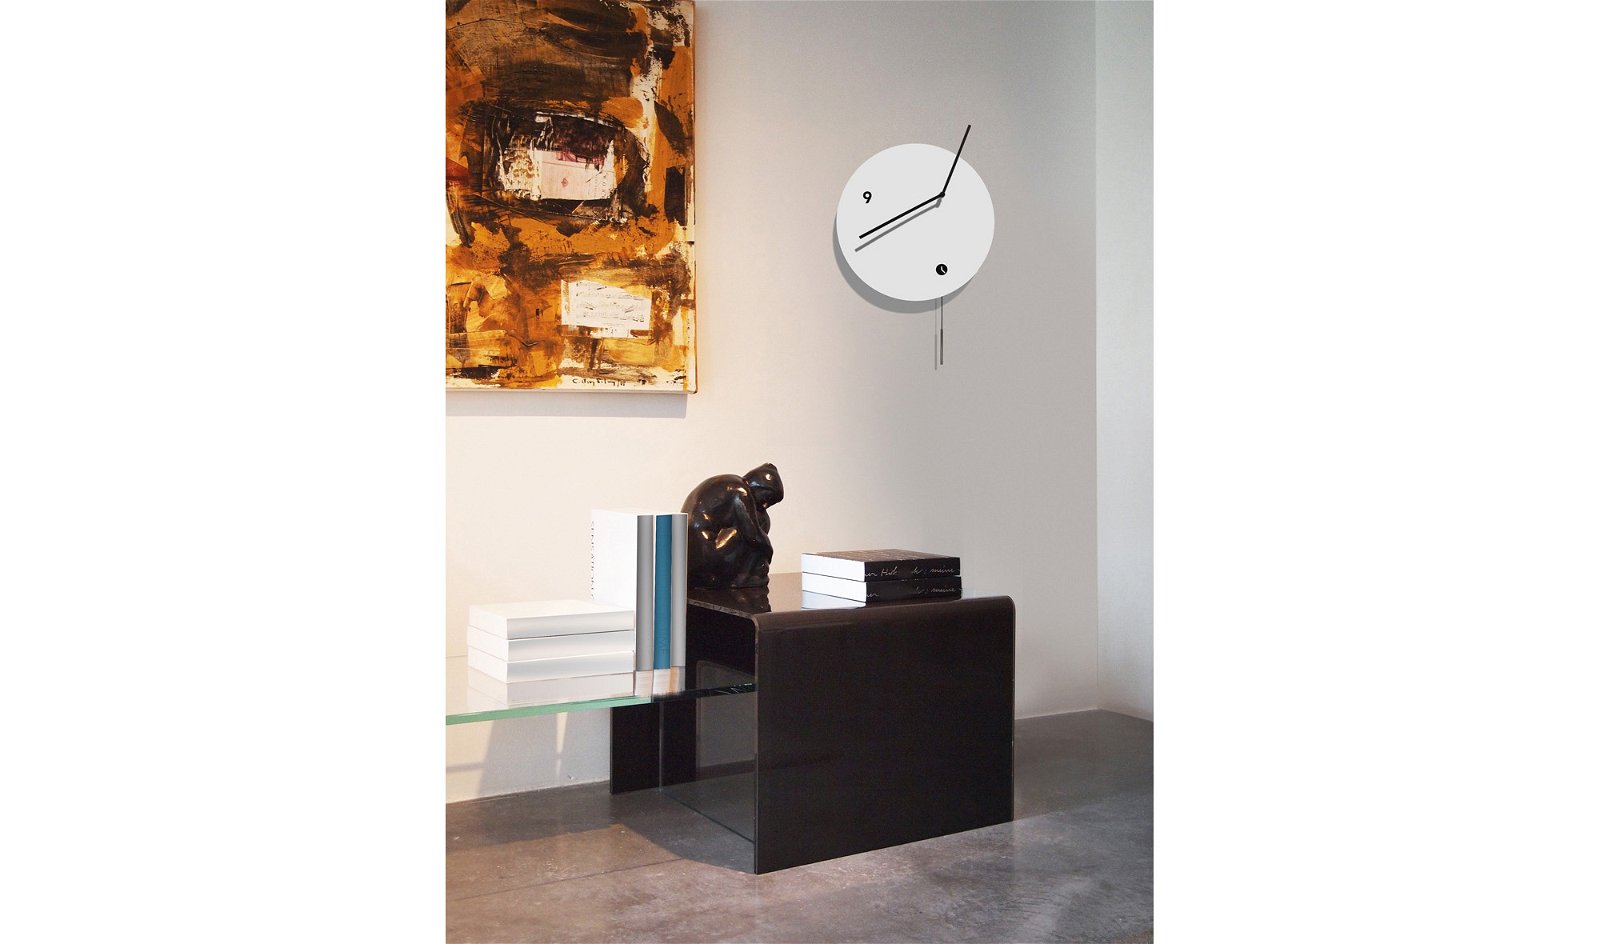 Reloj Globus by Tothora